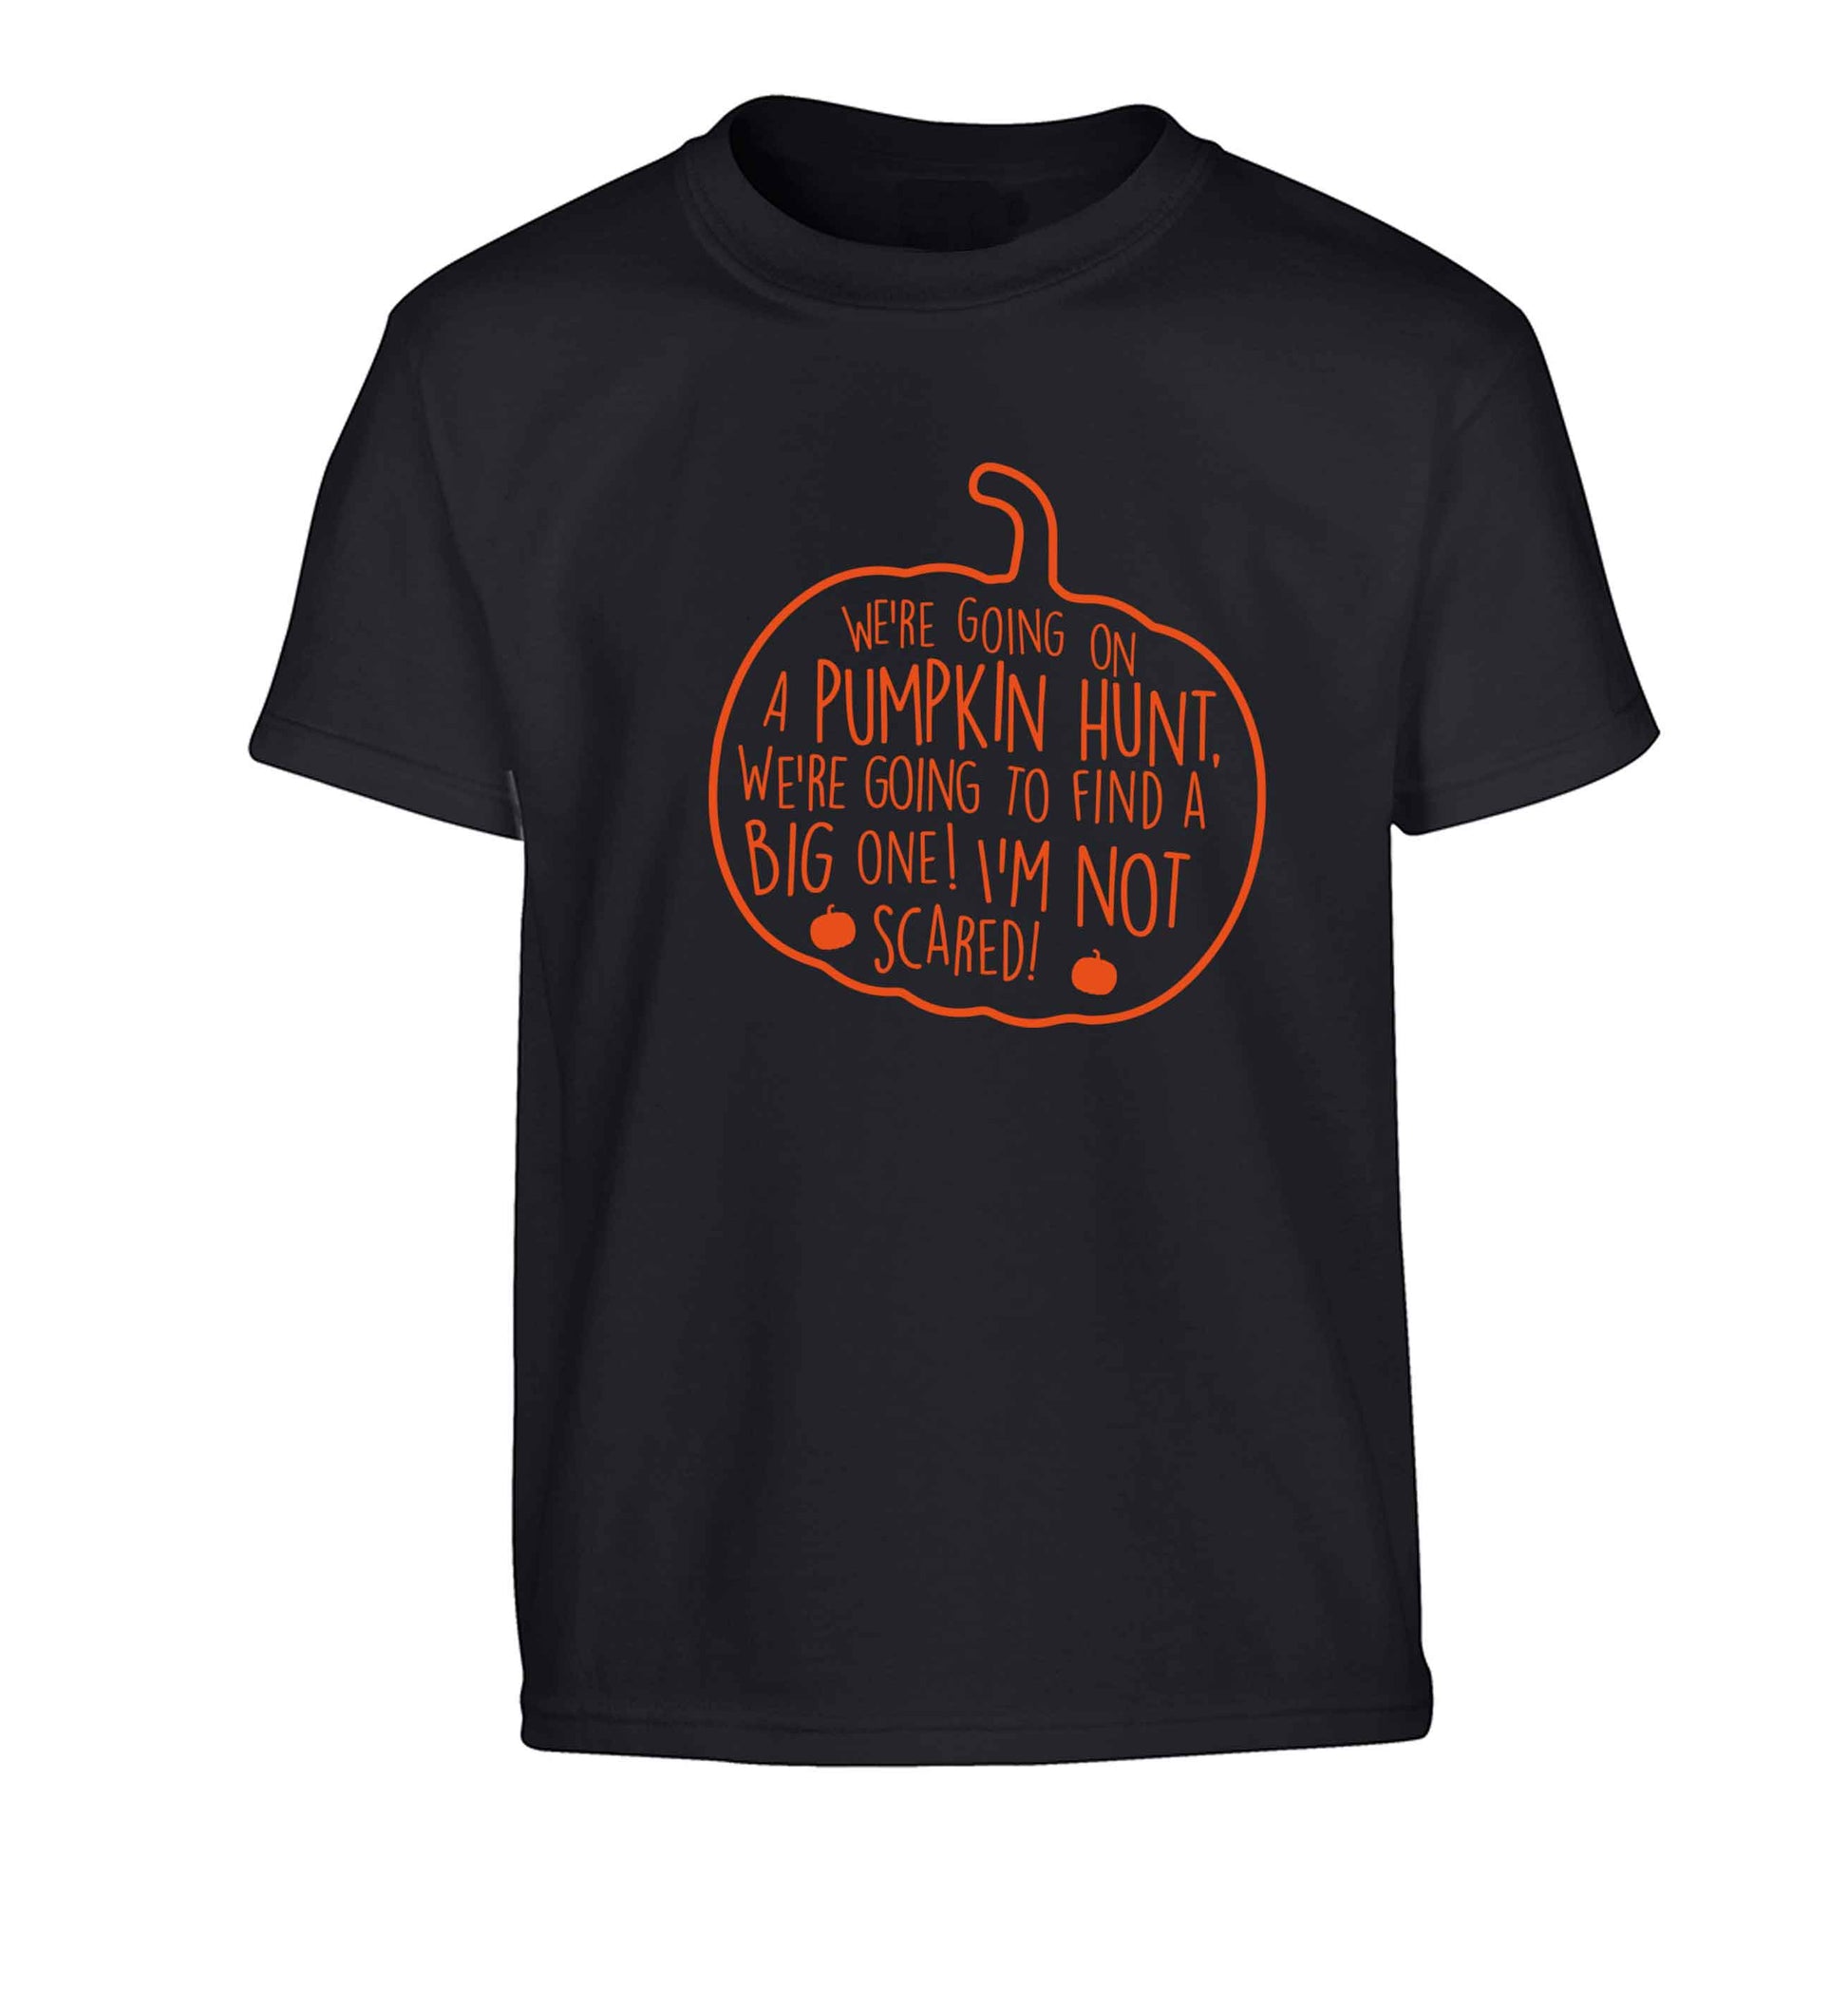 We're going on a pumpkin hunt Children's black Tshirt 12-13 Years